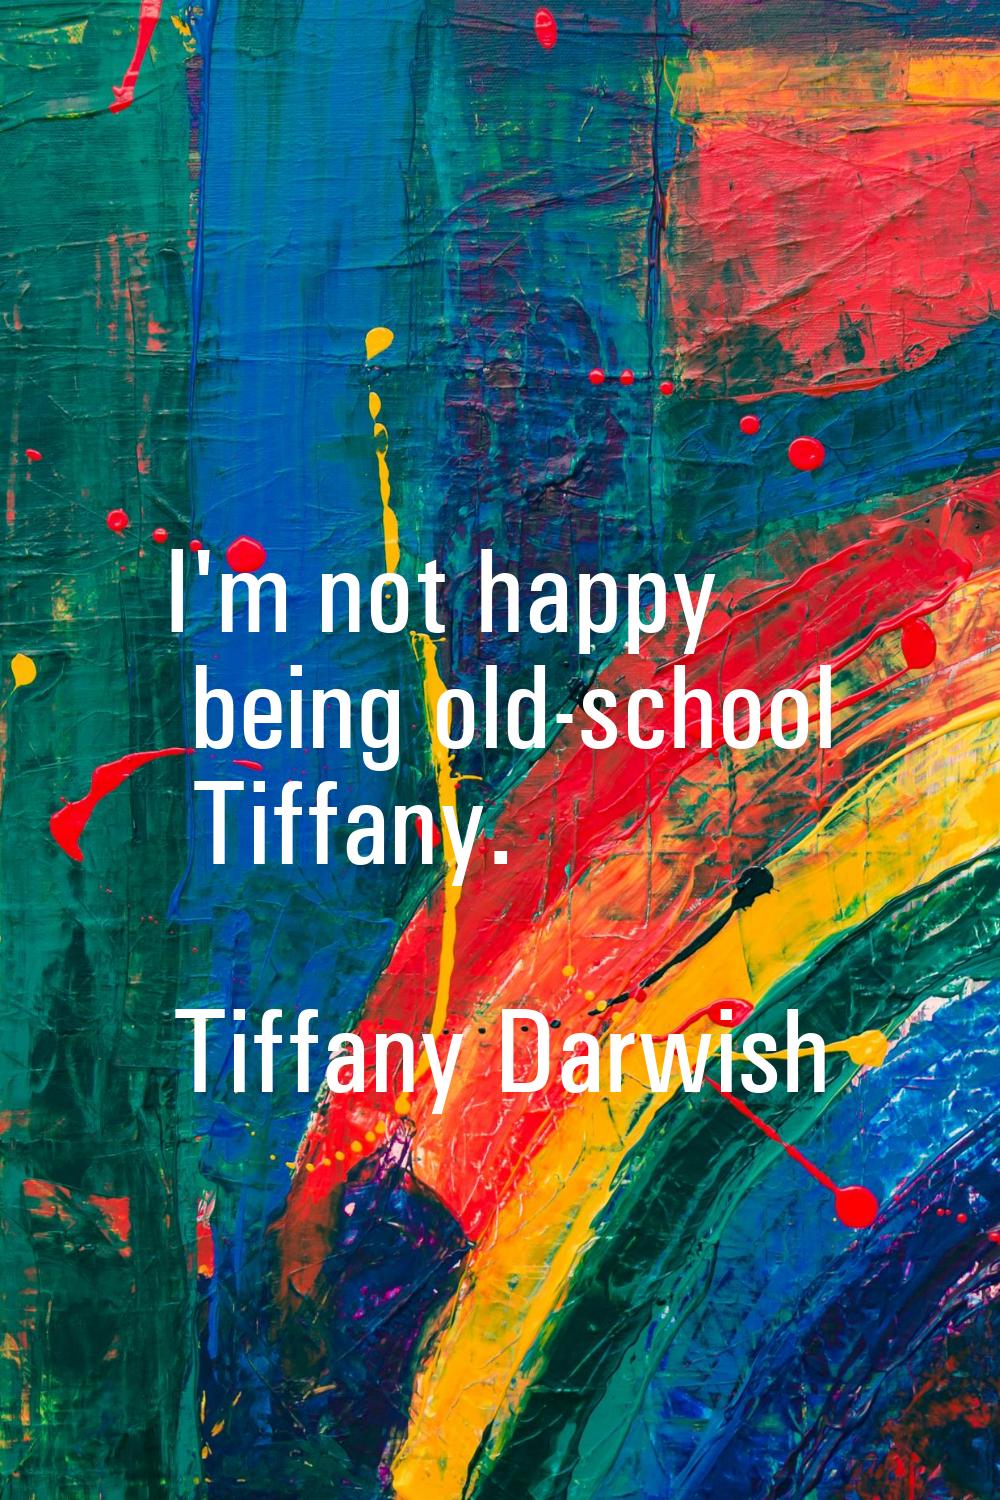 I'm not happy being old-school Tiffany.